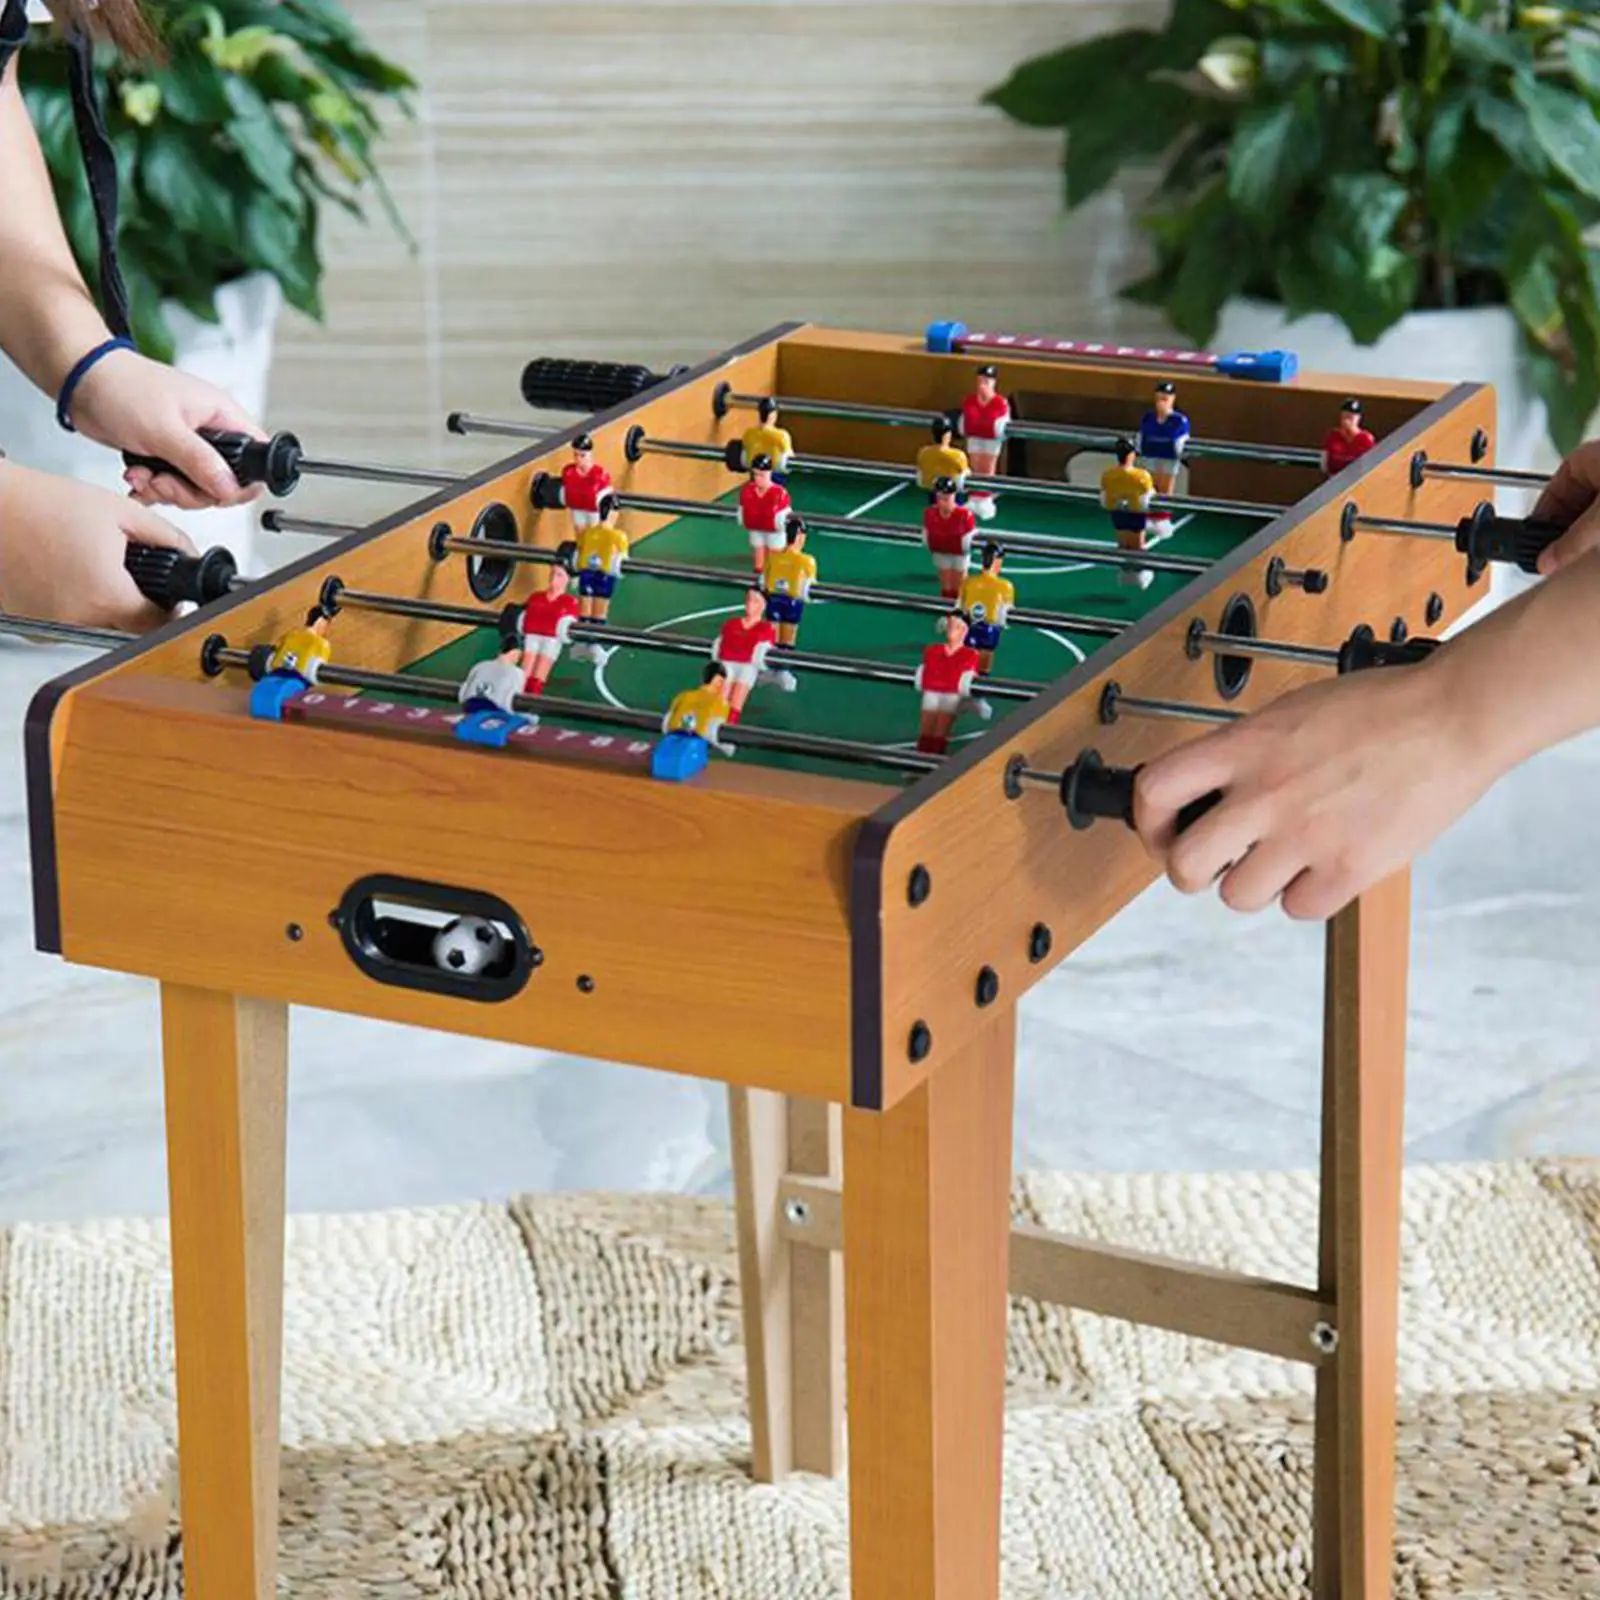 Wood Foosball Table Sports Tabletop Football Game Desktop Game for Indoor